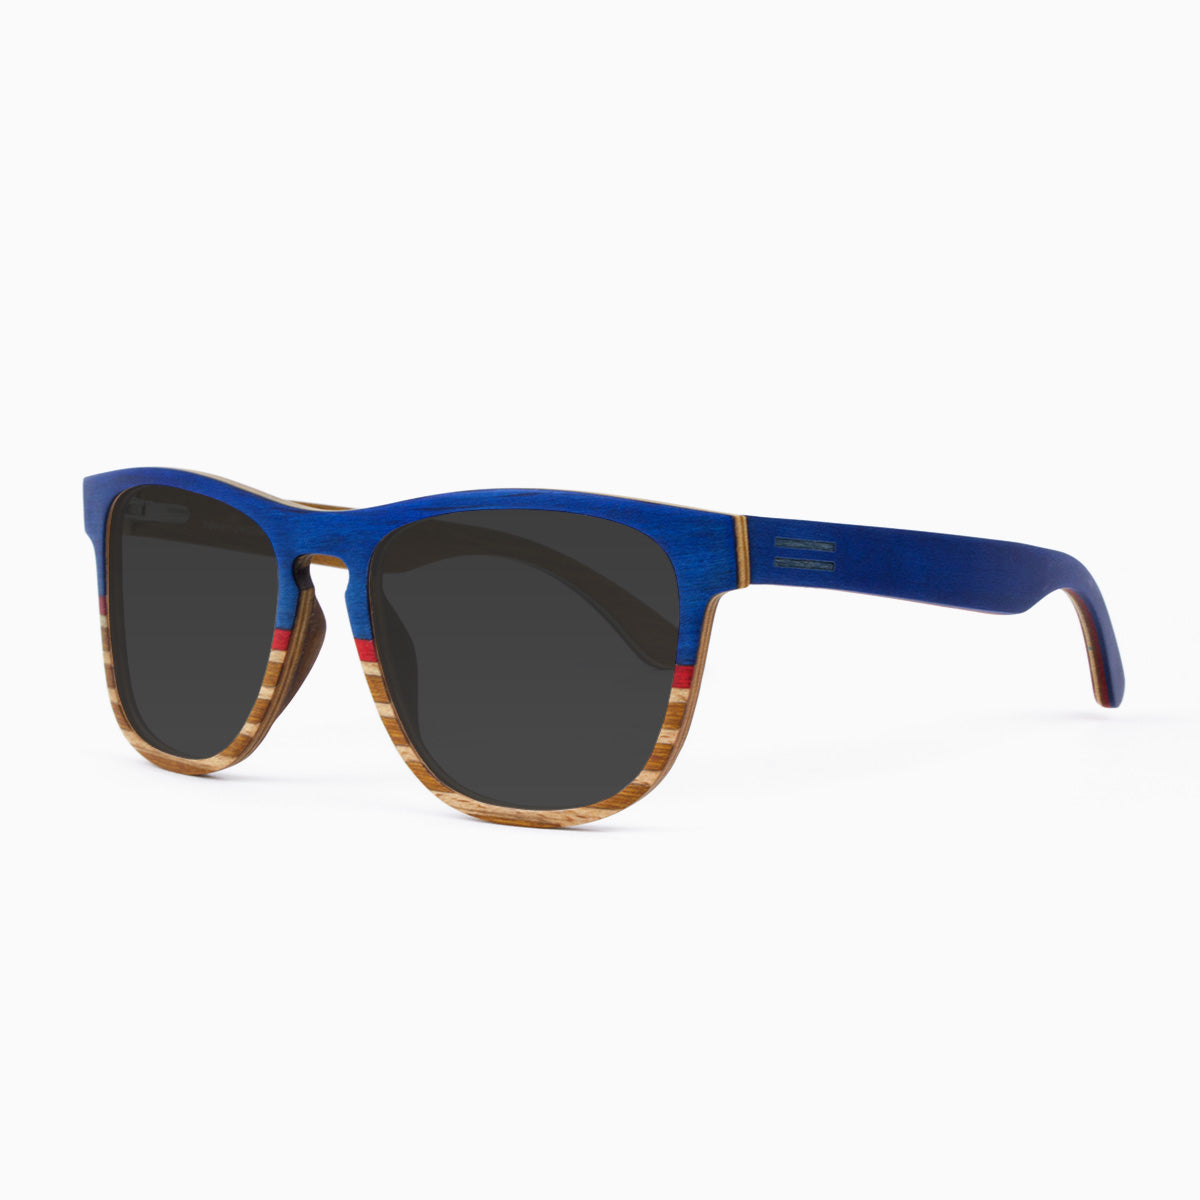 Sanibel - Maritime Wood Sunglasses